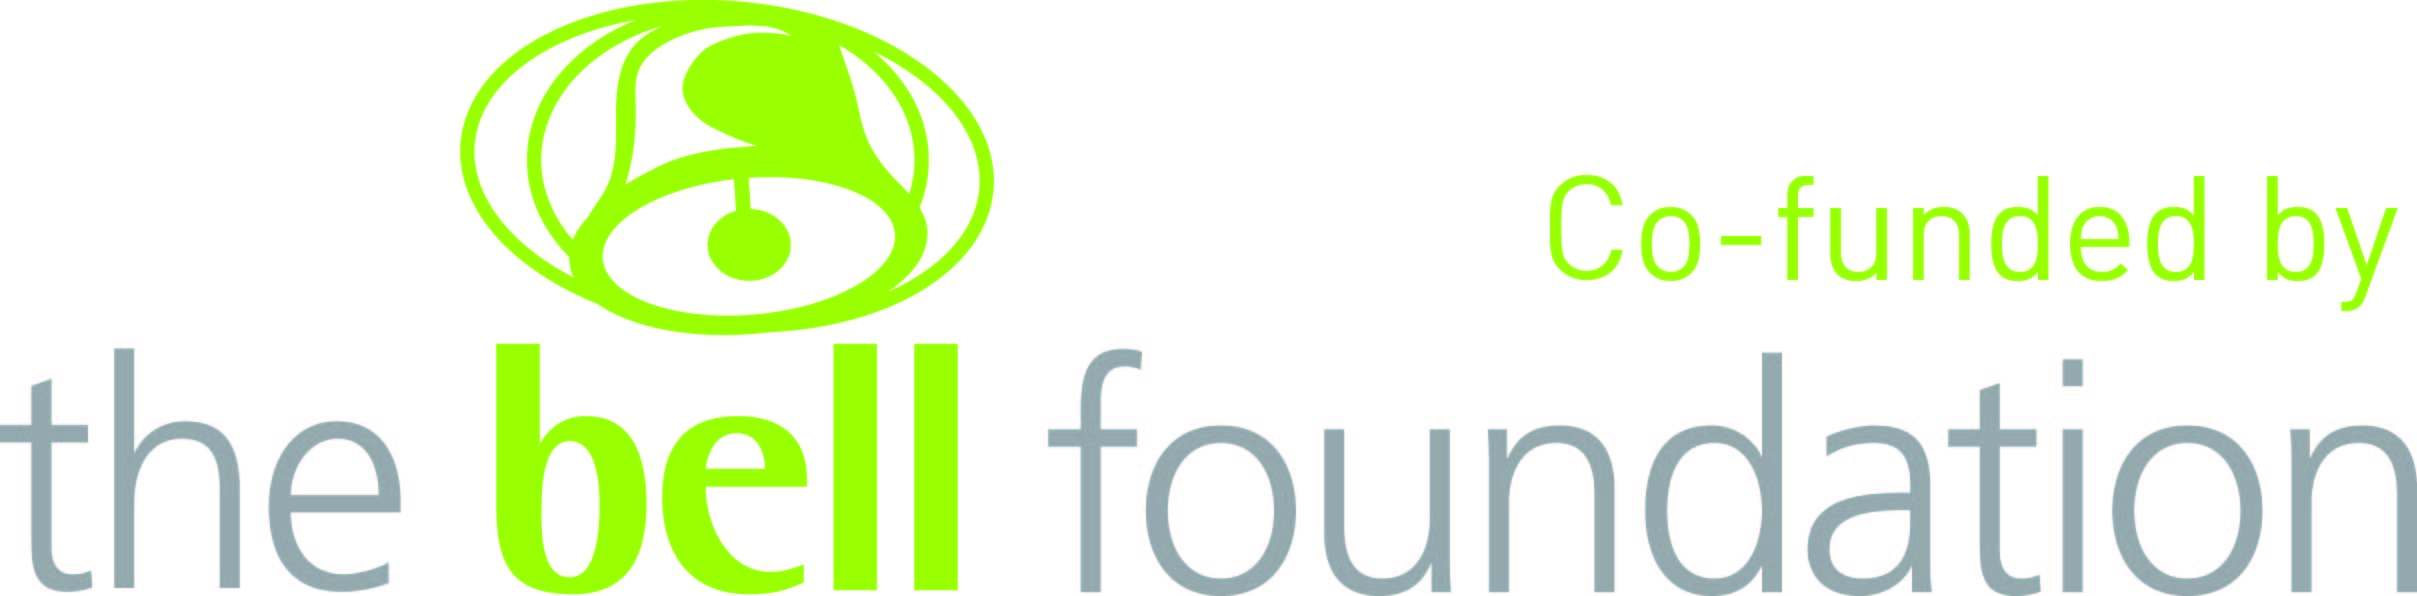 thebellfoundation-colour-cmyk- co-funded logo.jpg